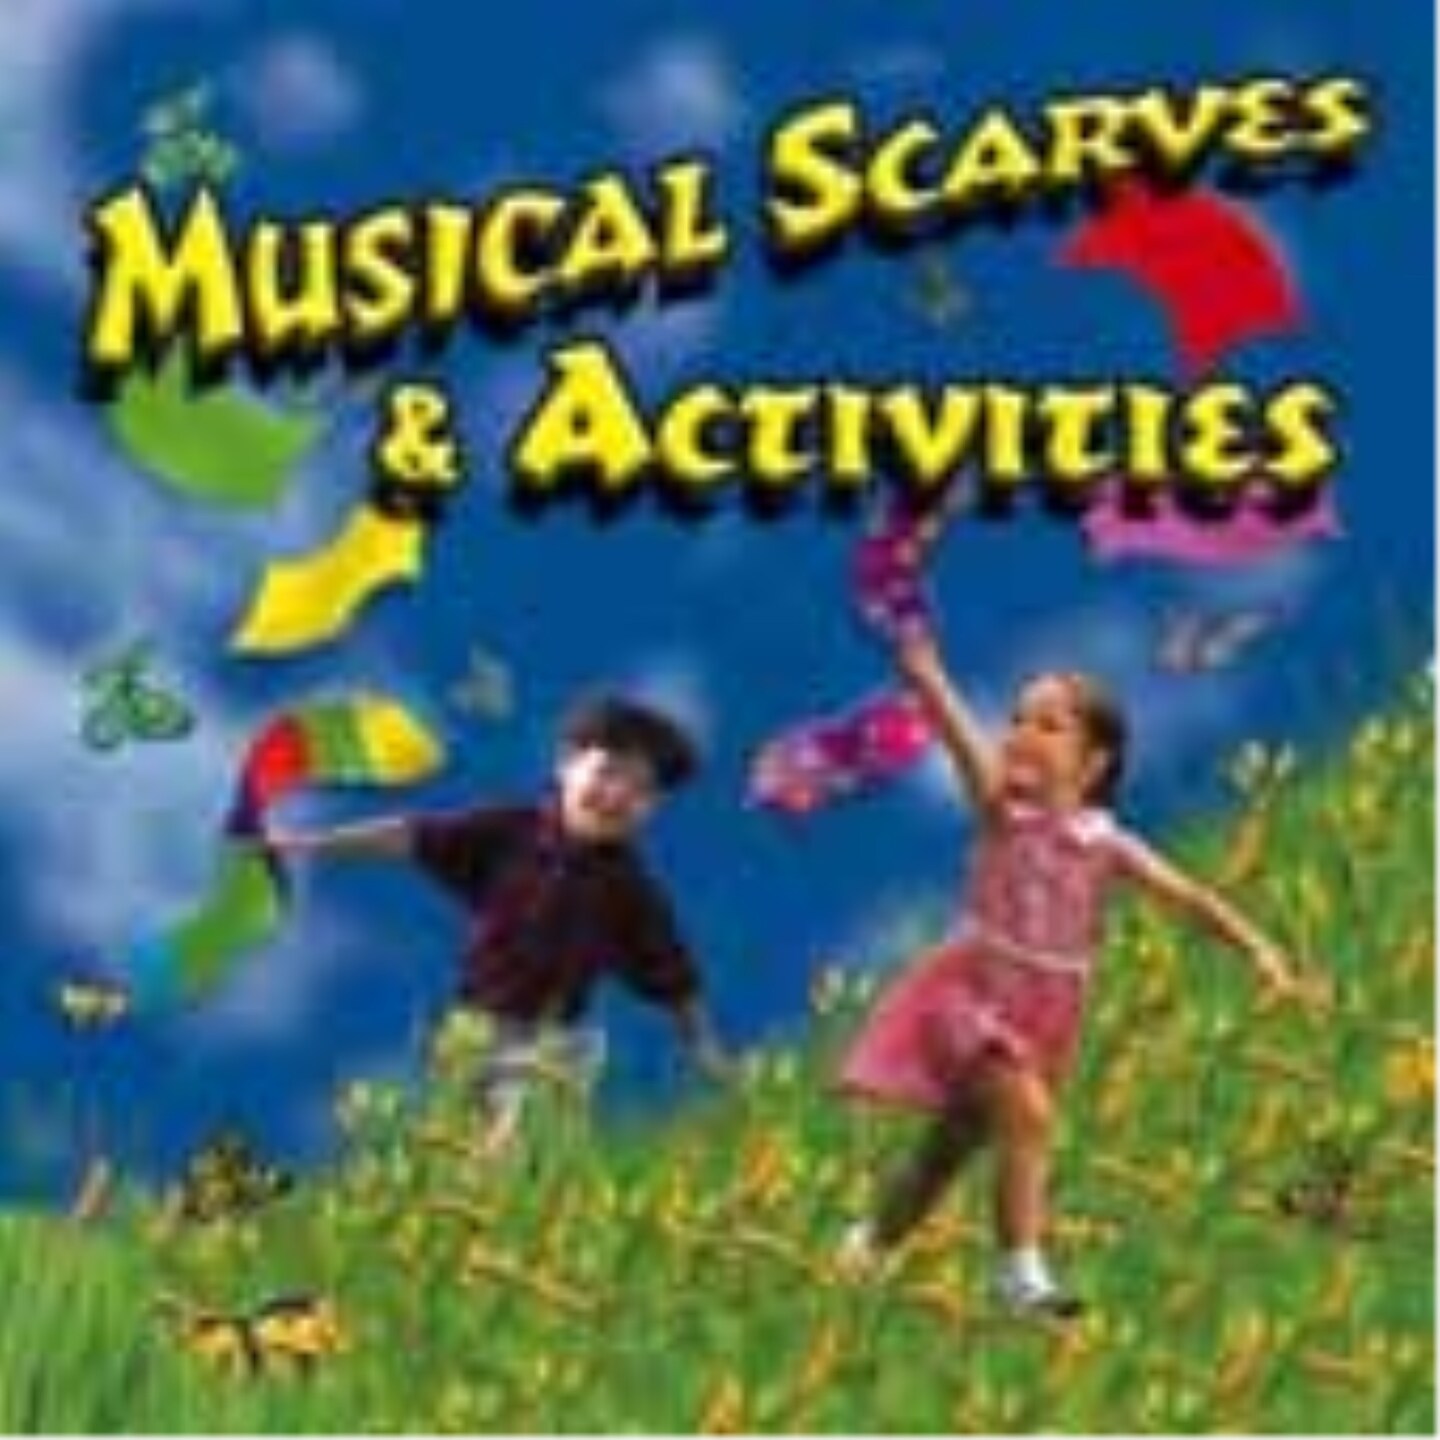 Musical Scarves Educational CD